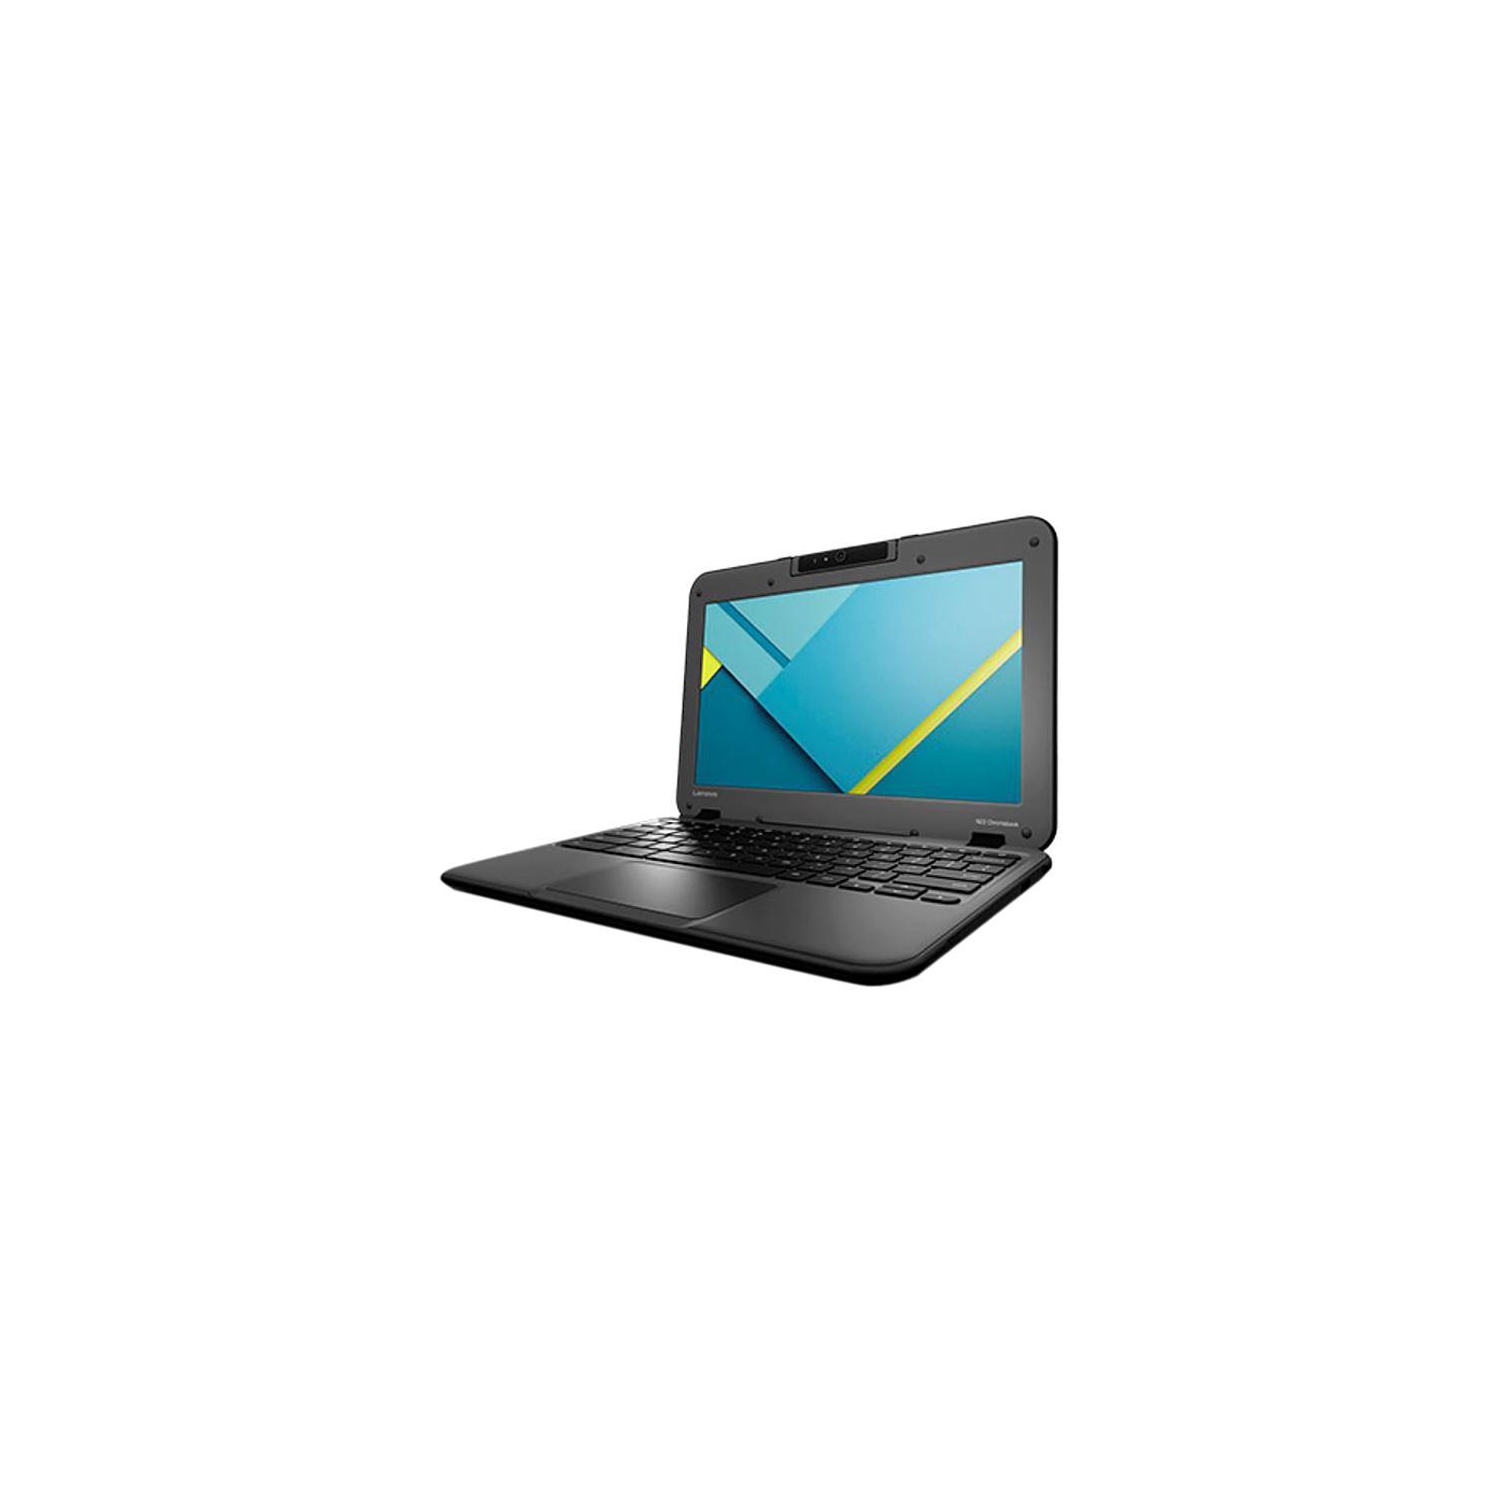 Refurbished (Excellent) - Lenovo Chromebook N22 11.6" Intel Celeron N3060 4GB 16GB SSD - Black